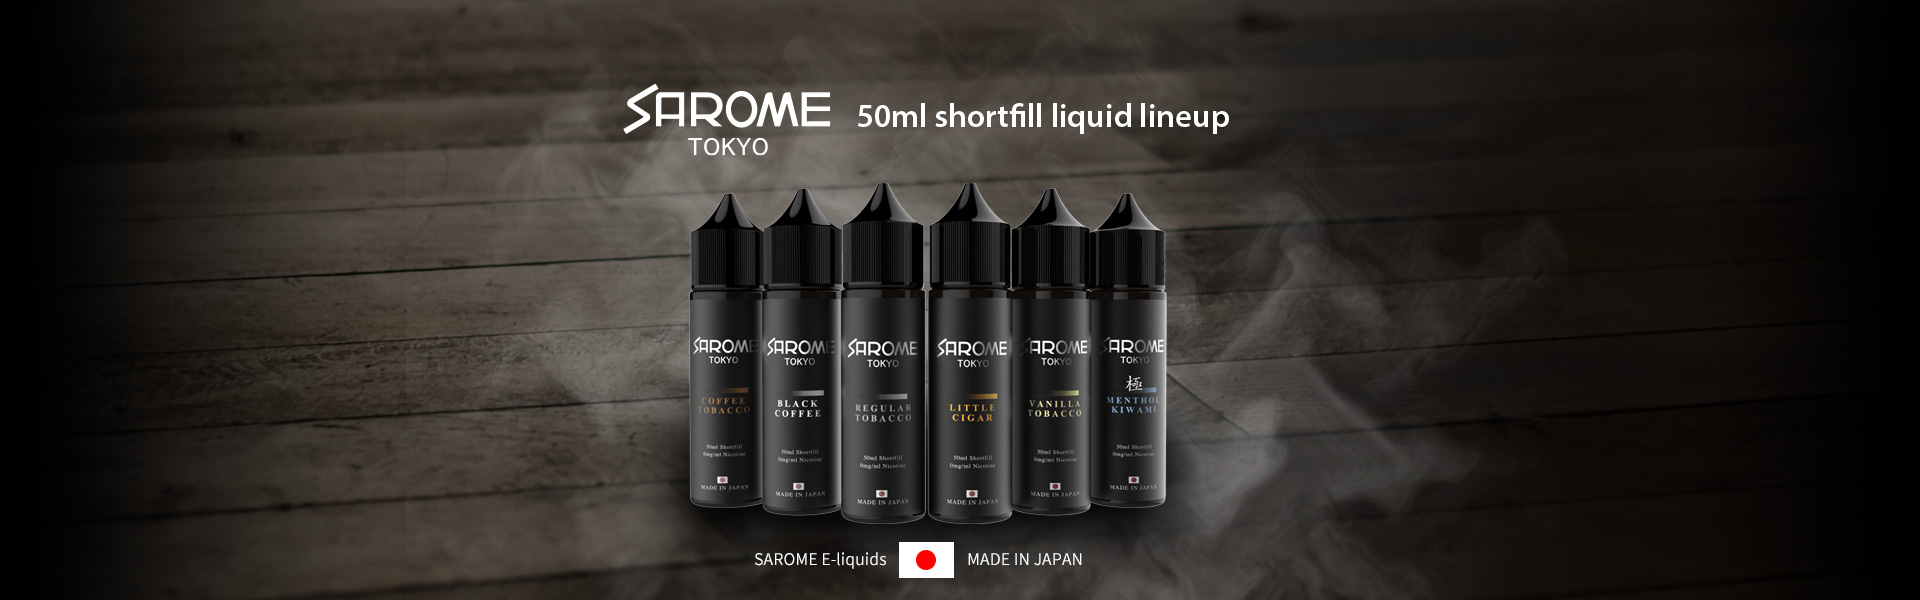 SAROME TOKYO / 50ml shortfill liquid lineup